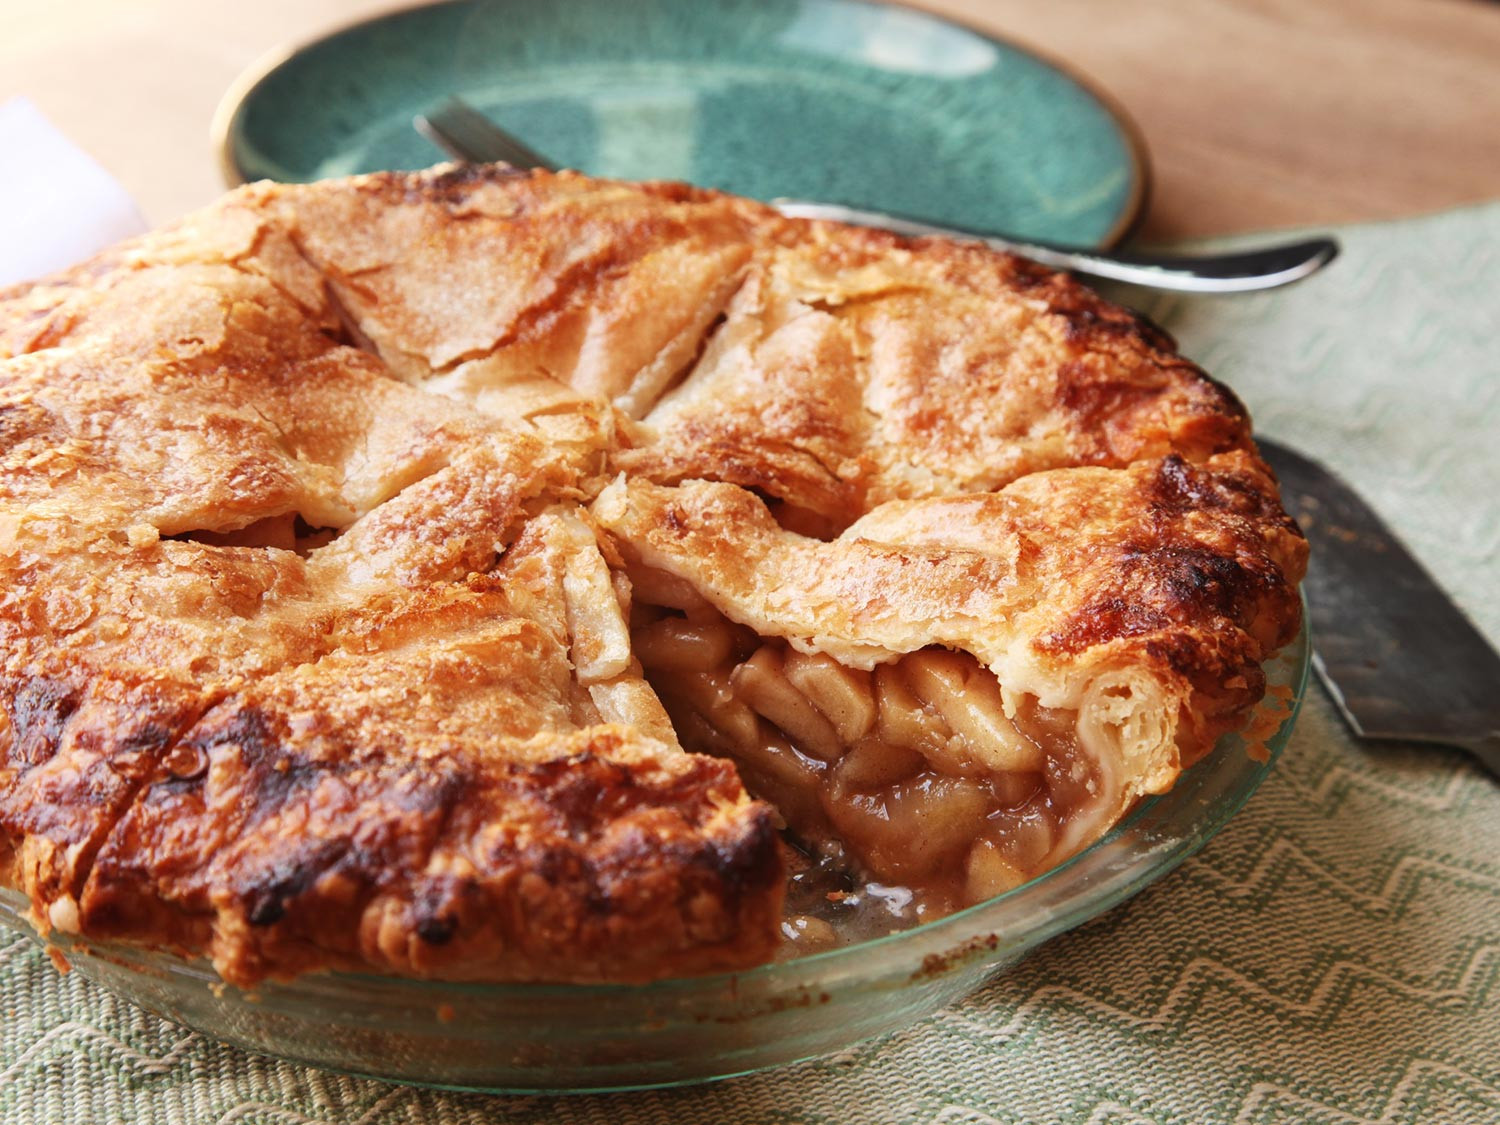 How To Make An Apple Pie
 Gooey Apple Pie Recipe